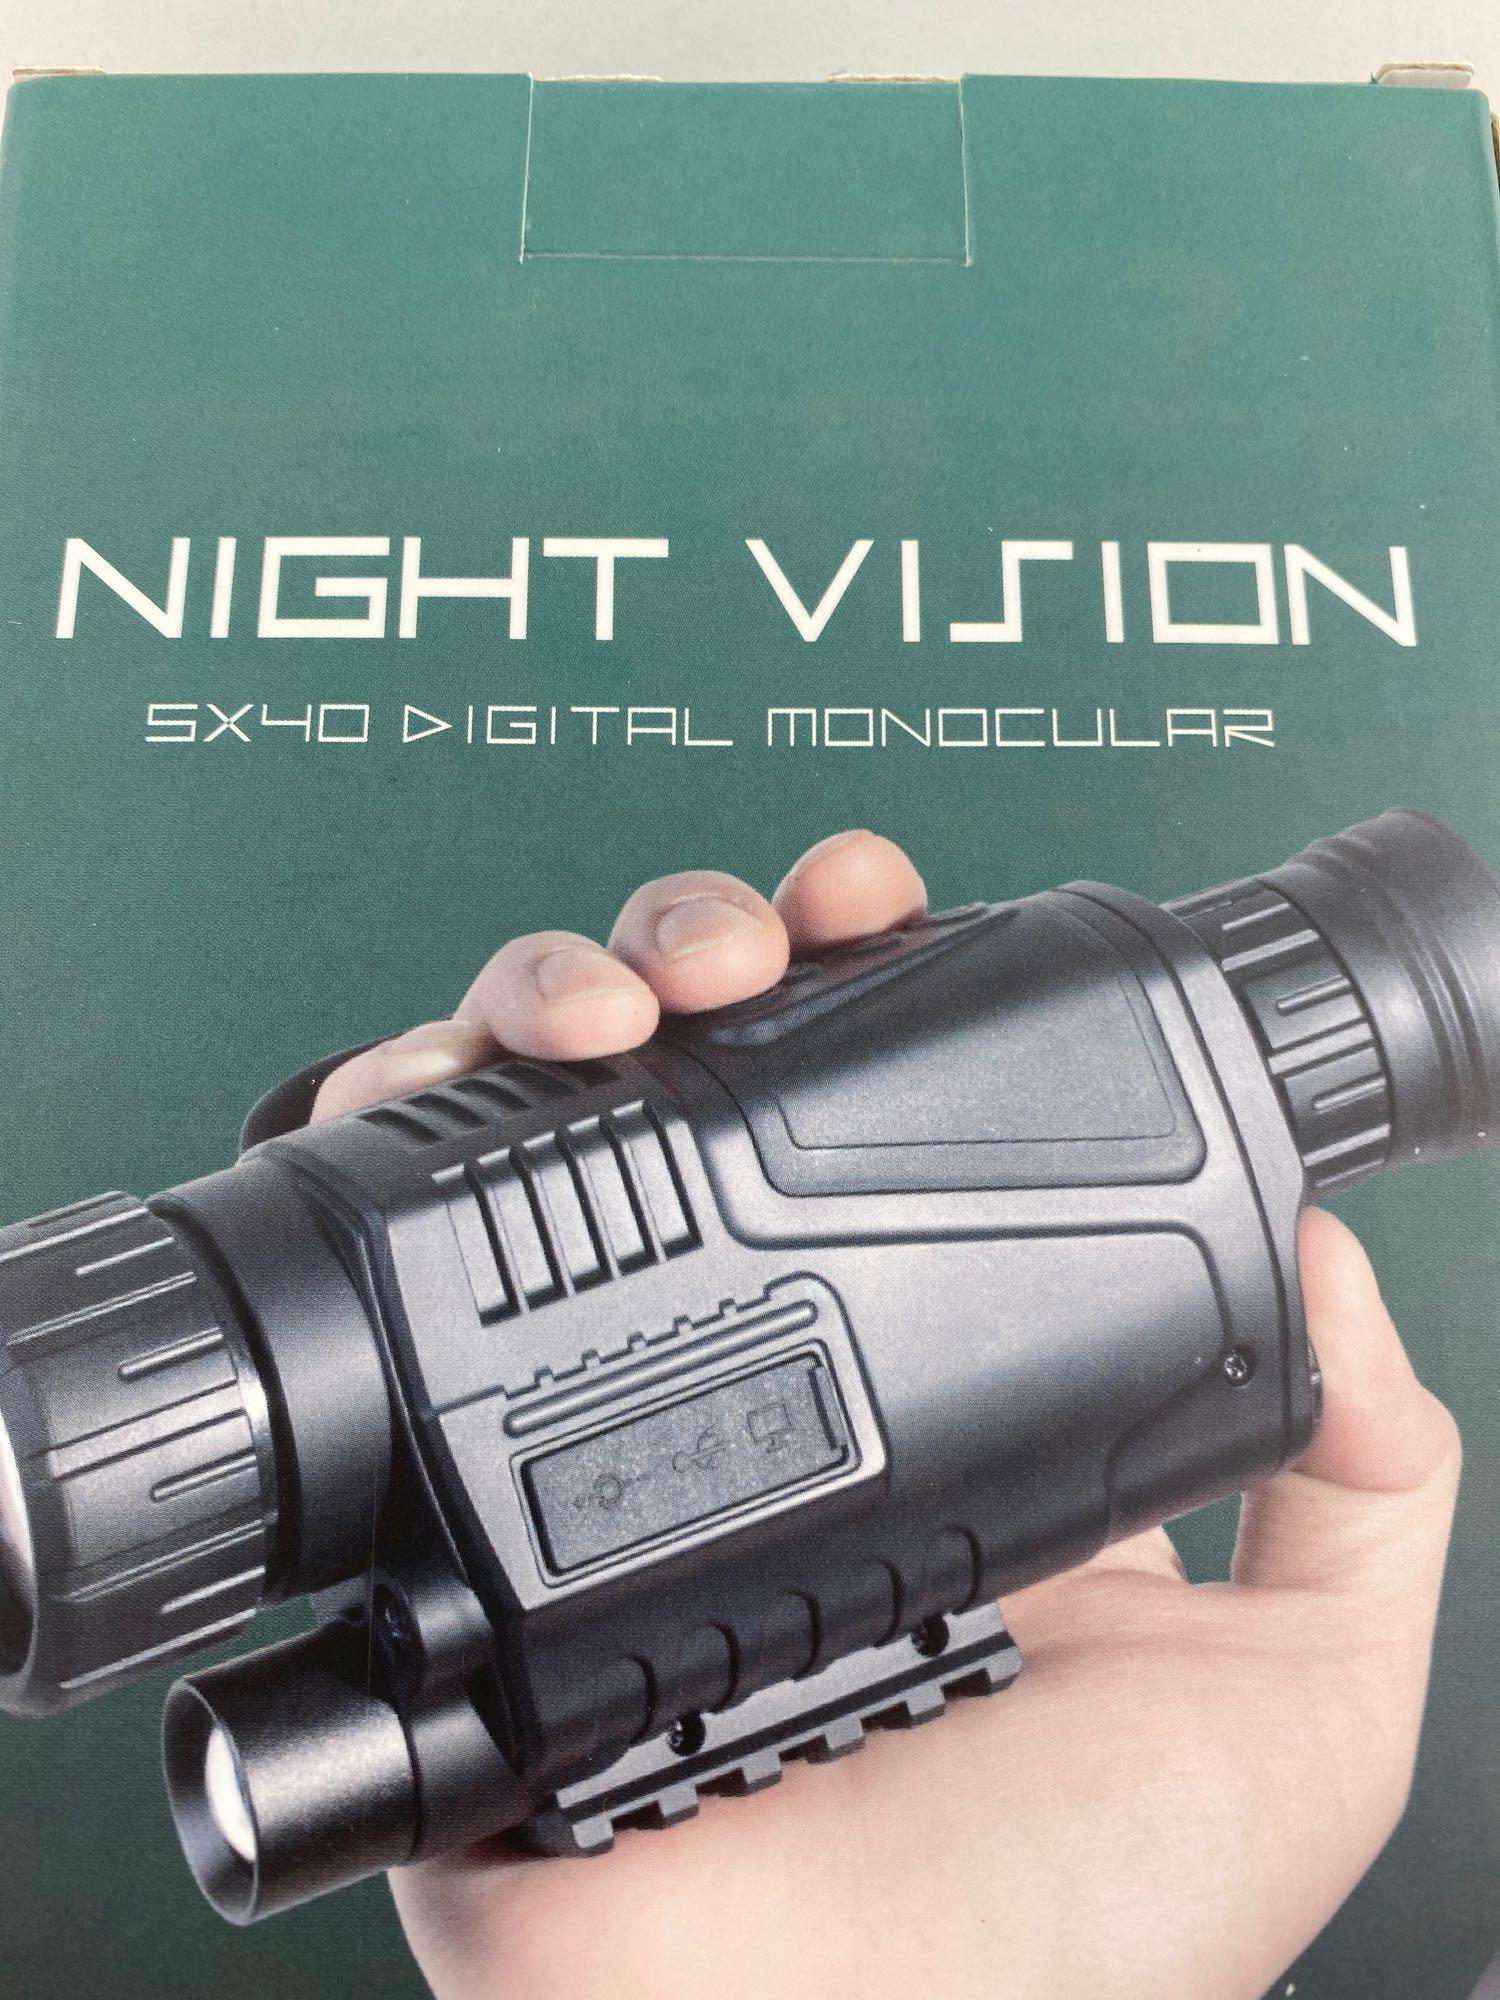 P1S-0540 5x40 Infrared IR Digital Night Vision Monocular Scope, $205.99 MSRP (BRAND NEW)